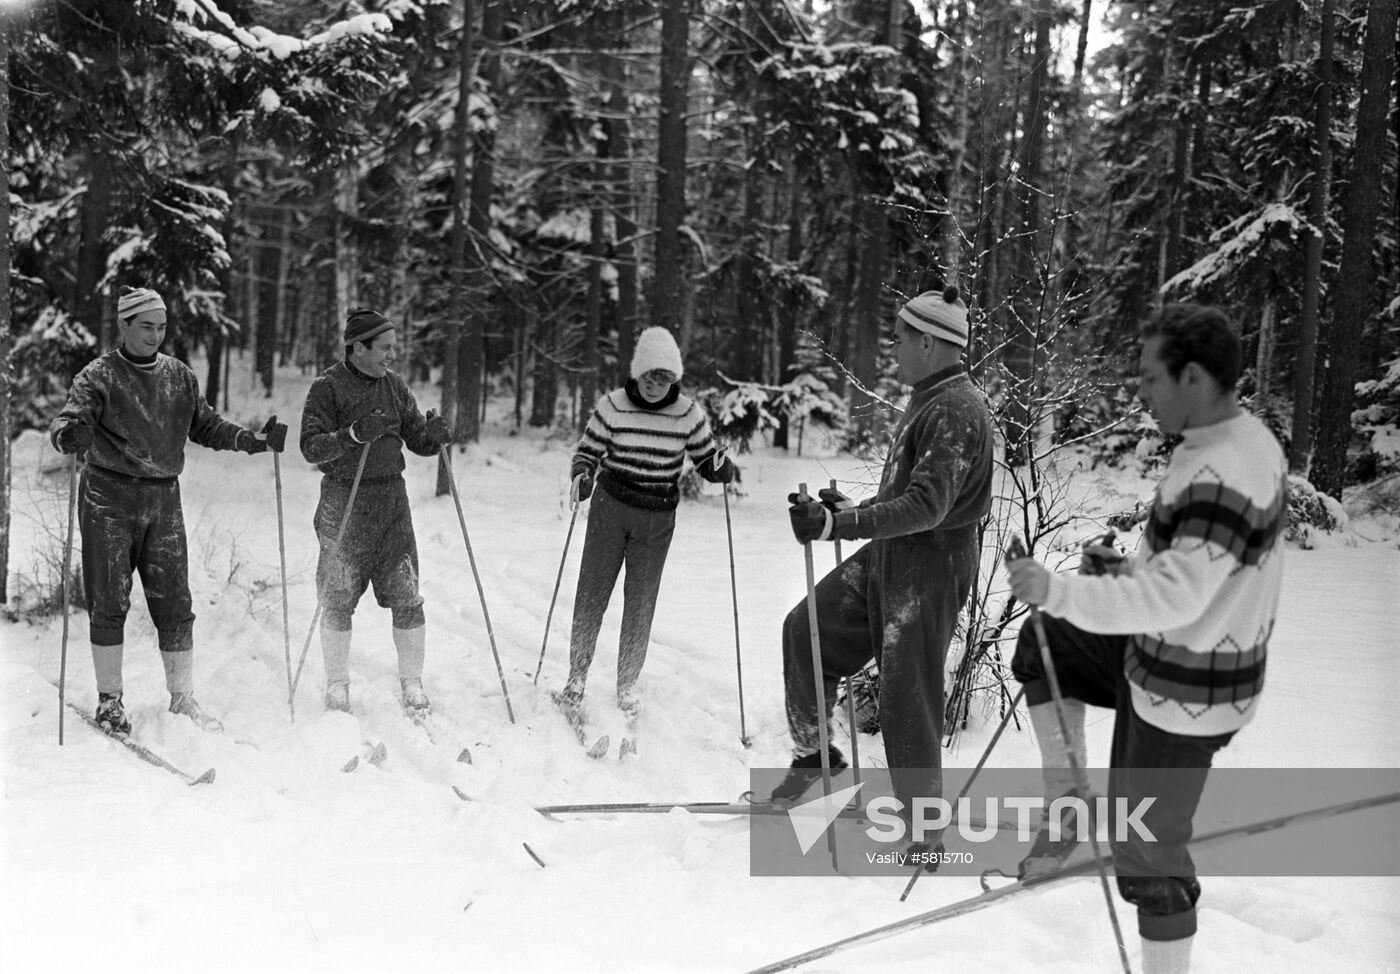 Soviet pilots-cosmonauts out skiing